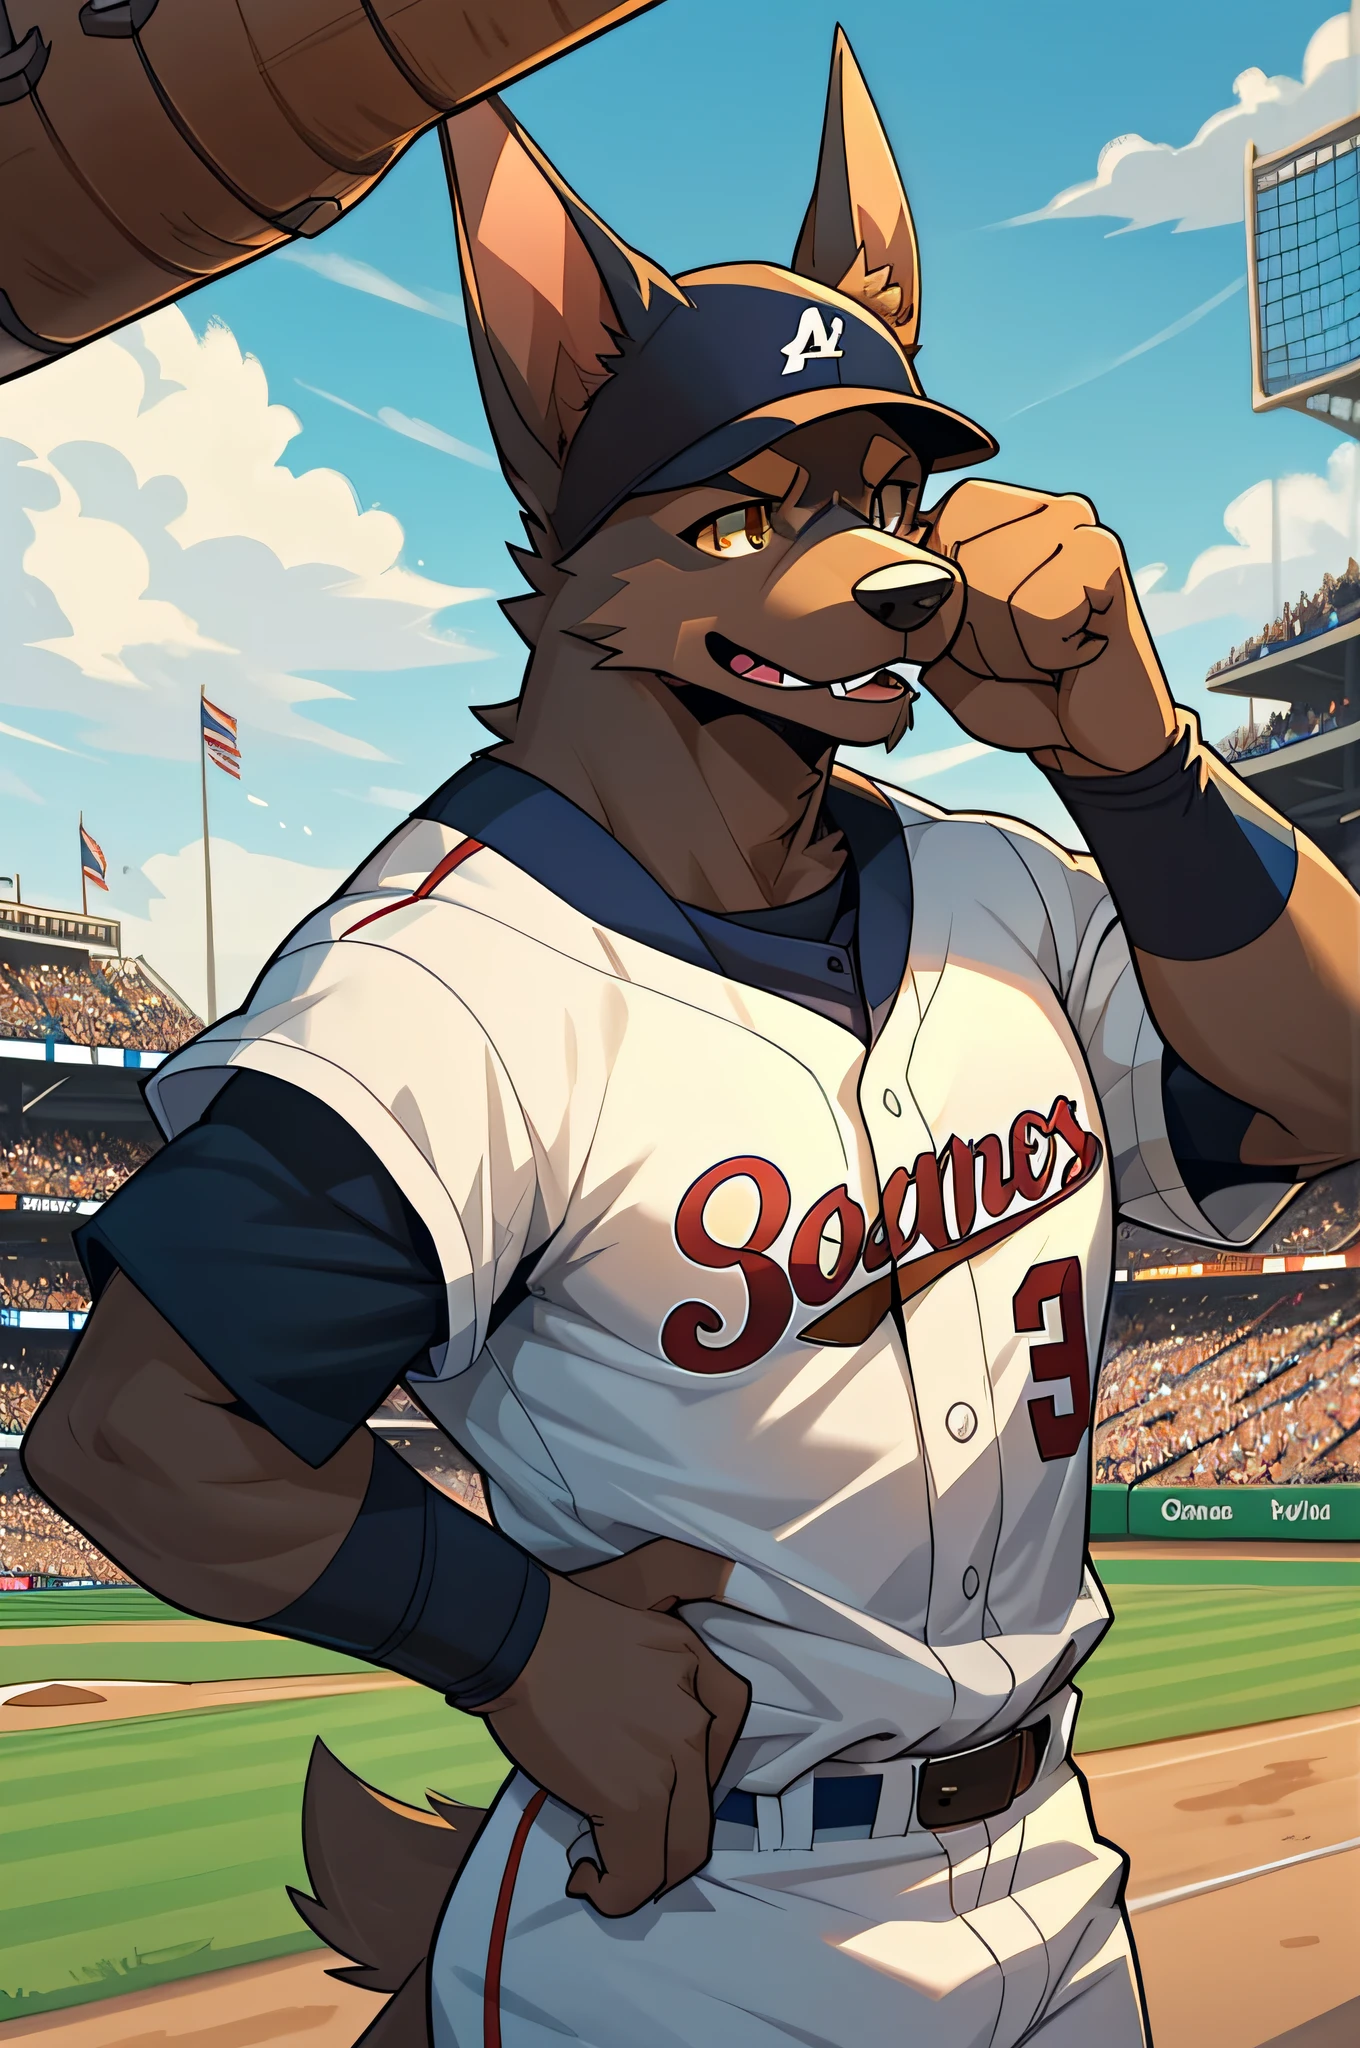 C4tt4stic, Perro Doberman de dibujos animados de jugador de béisbol que batea en uniforme de béisbol（Los detalles de la apariencia de los perros Doberman）